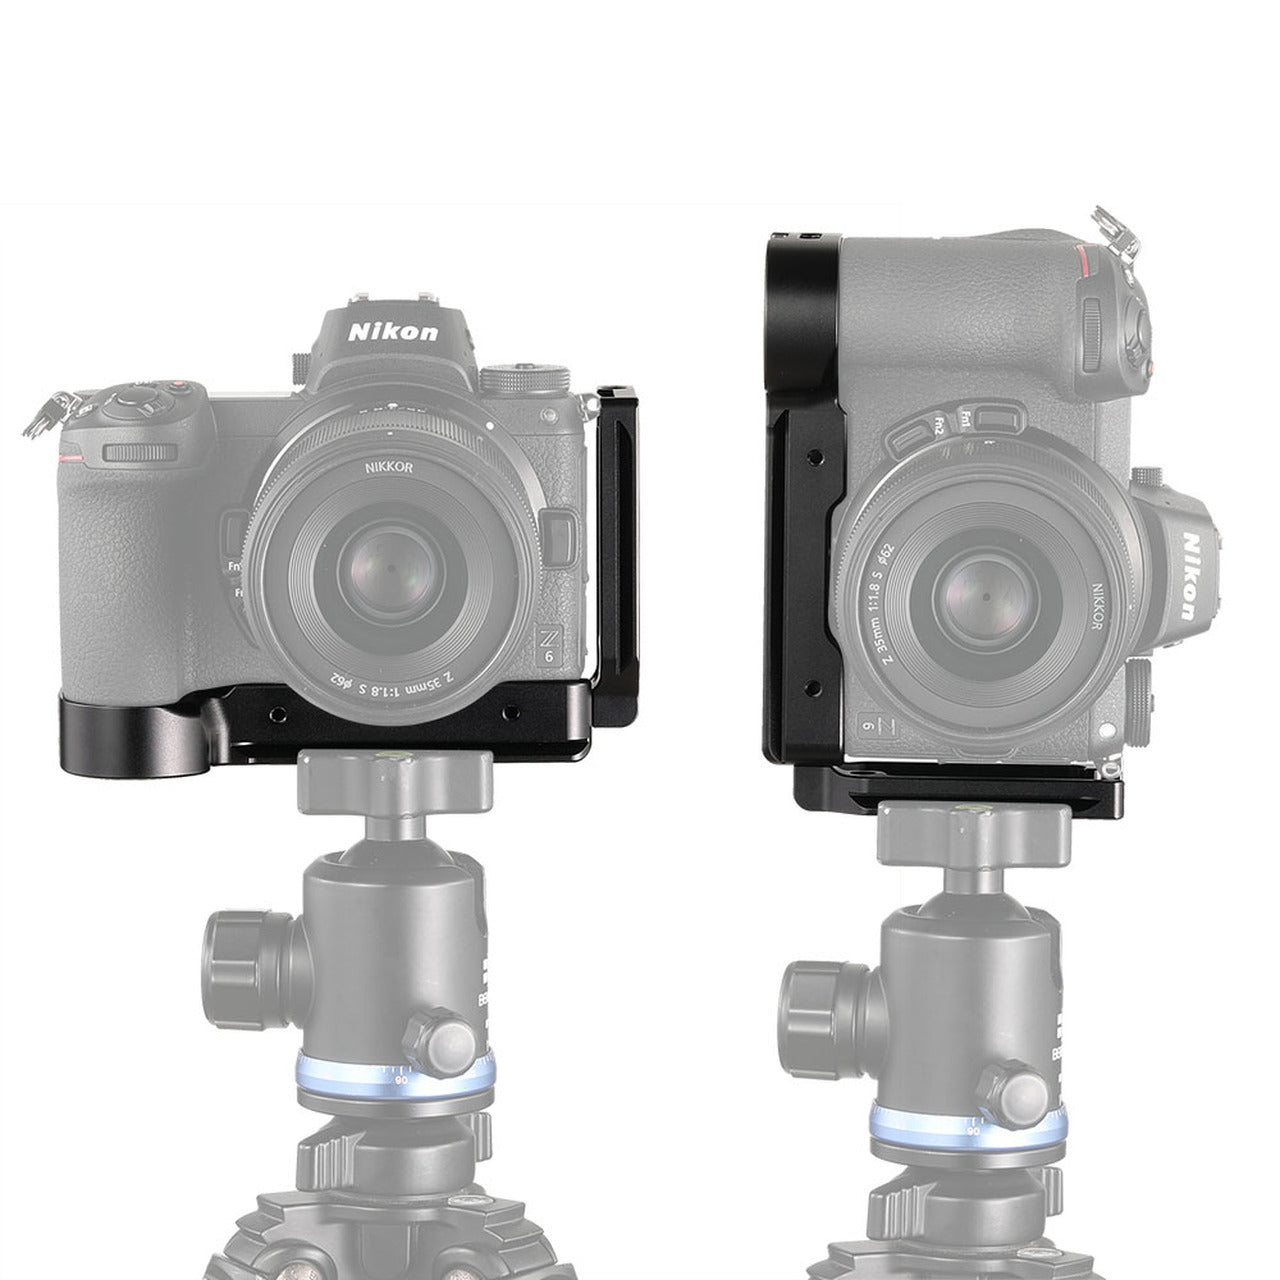 SmallRig Camera L-Bracket for Nikon Z5 / Z6 / Z7 / Z6 II / Z7 II with Allen Wrench Slidable Side Plate Anti-Twist Flanges | Model - APL2258